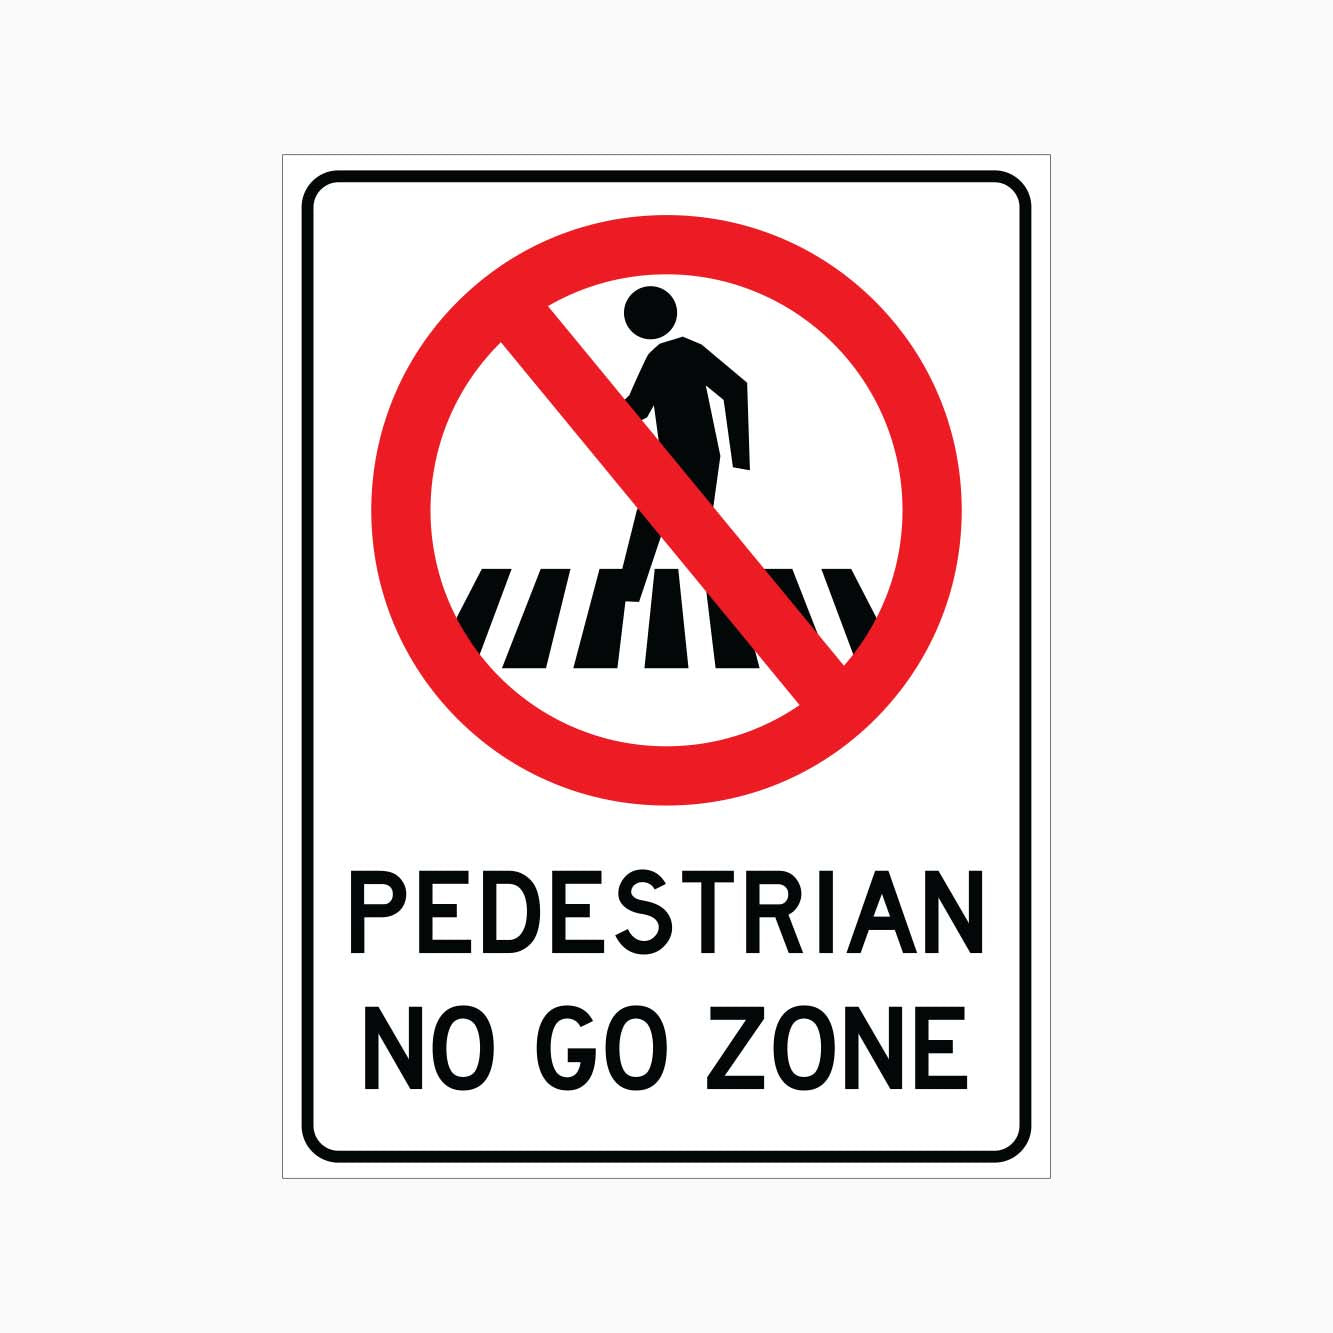 PEDESTRIAN NO GO ZONE SIGN - GET SIGNS